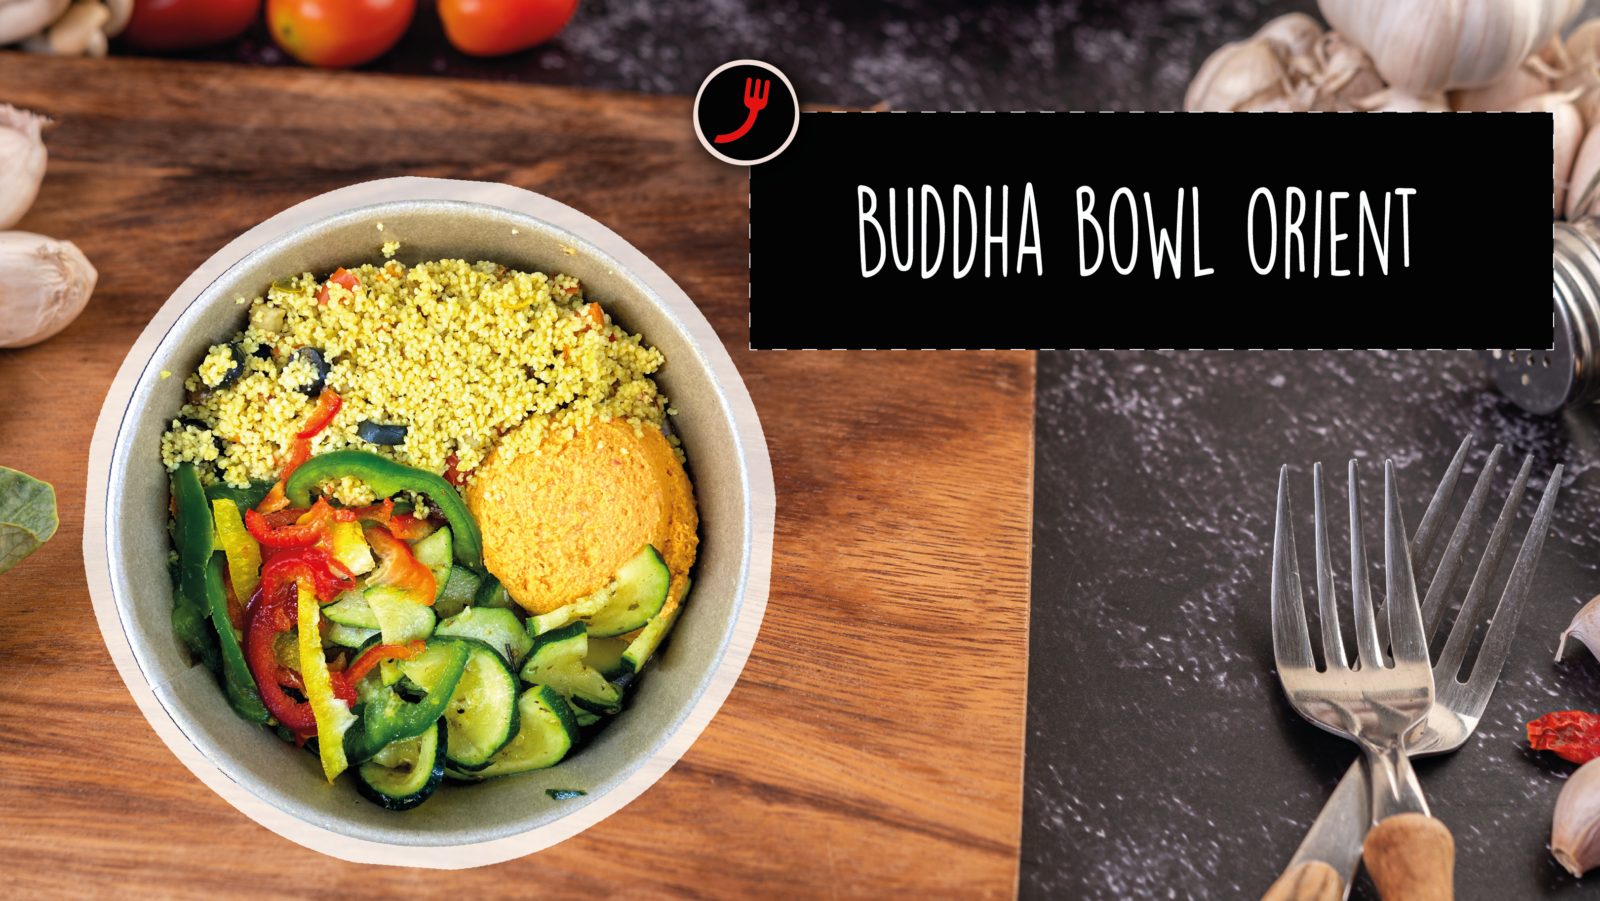 Buddha bowl orient